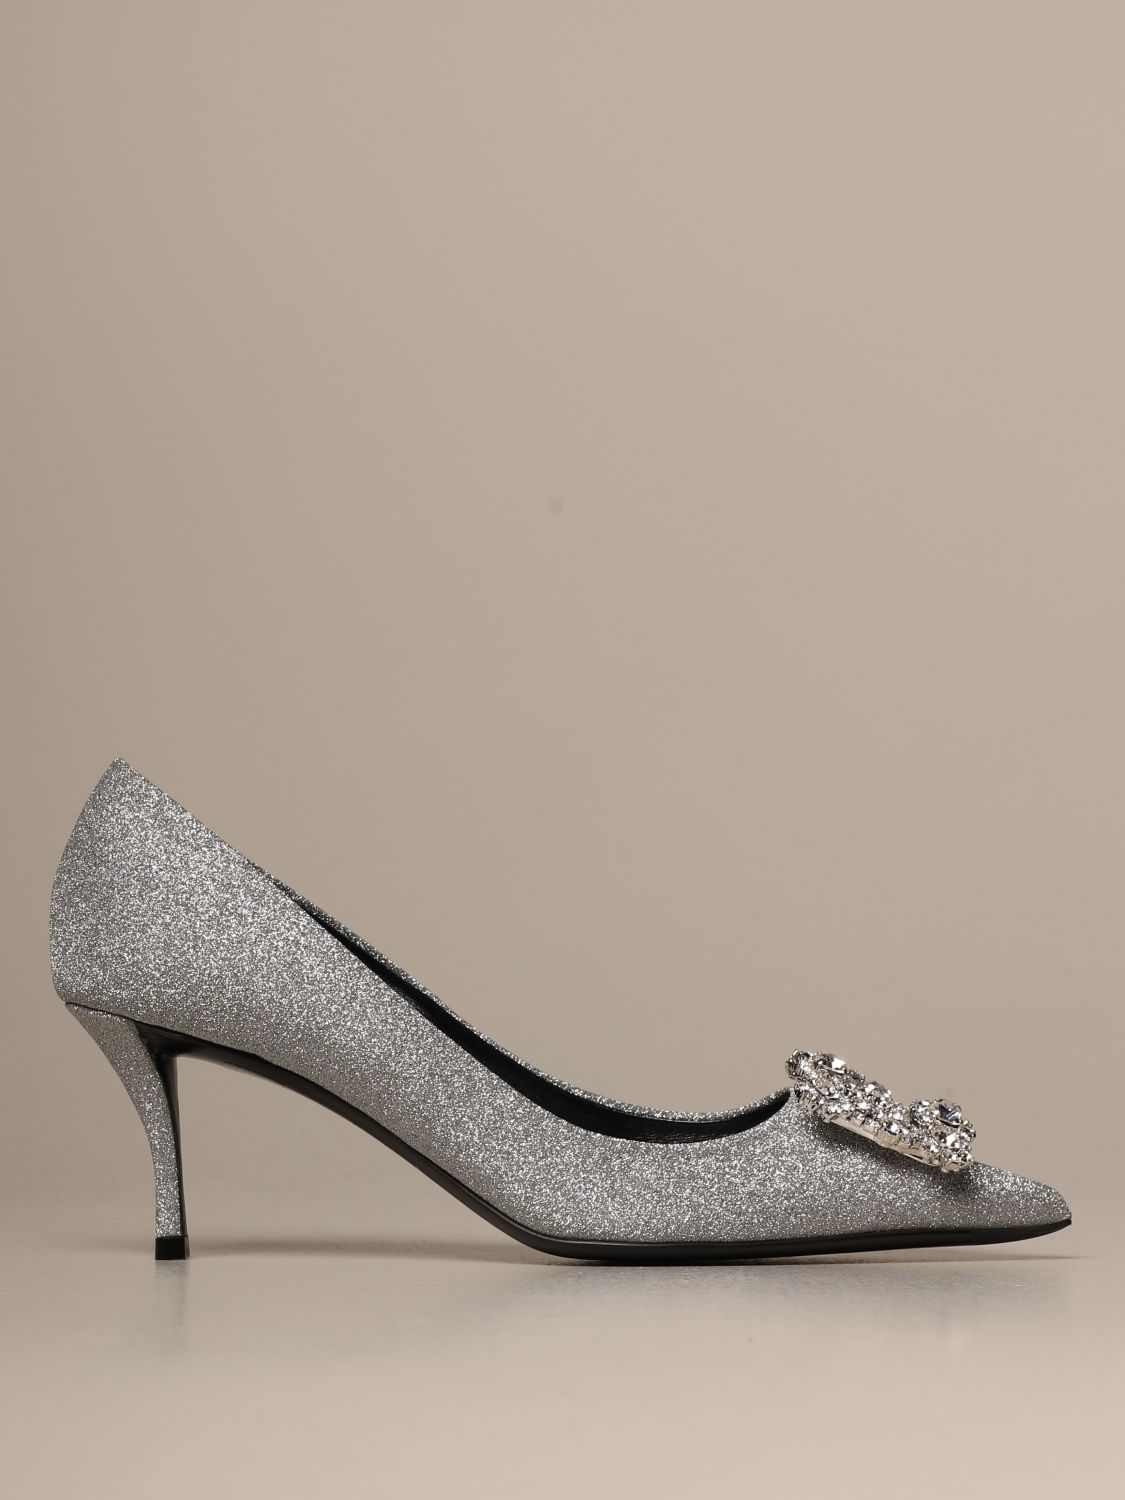 roger vivier silver shoes